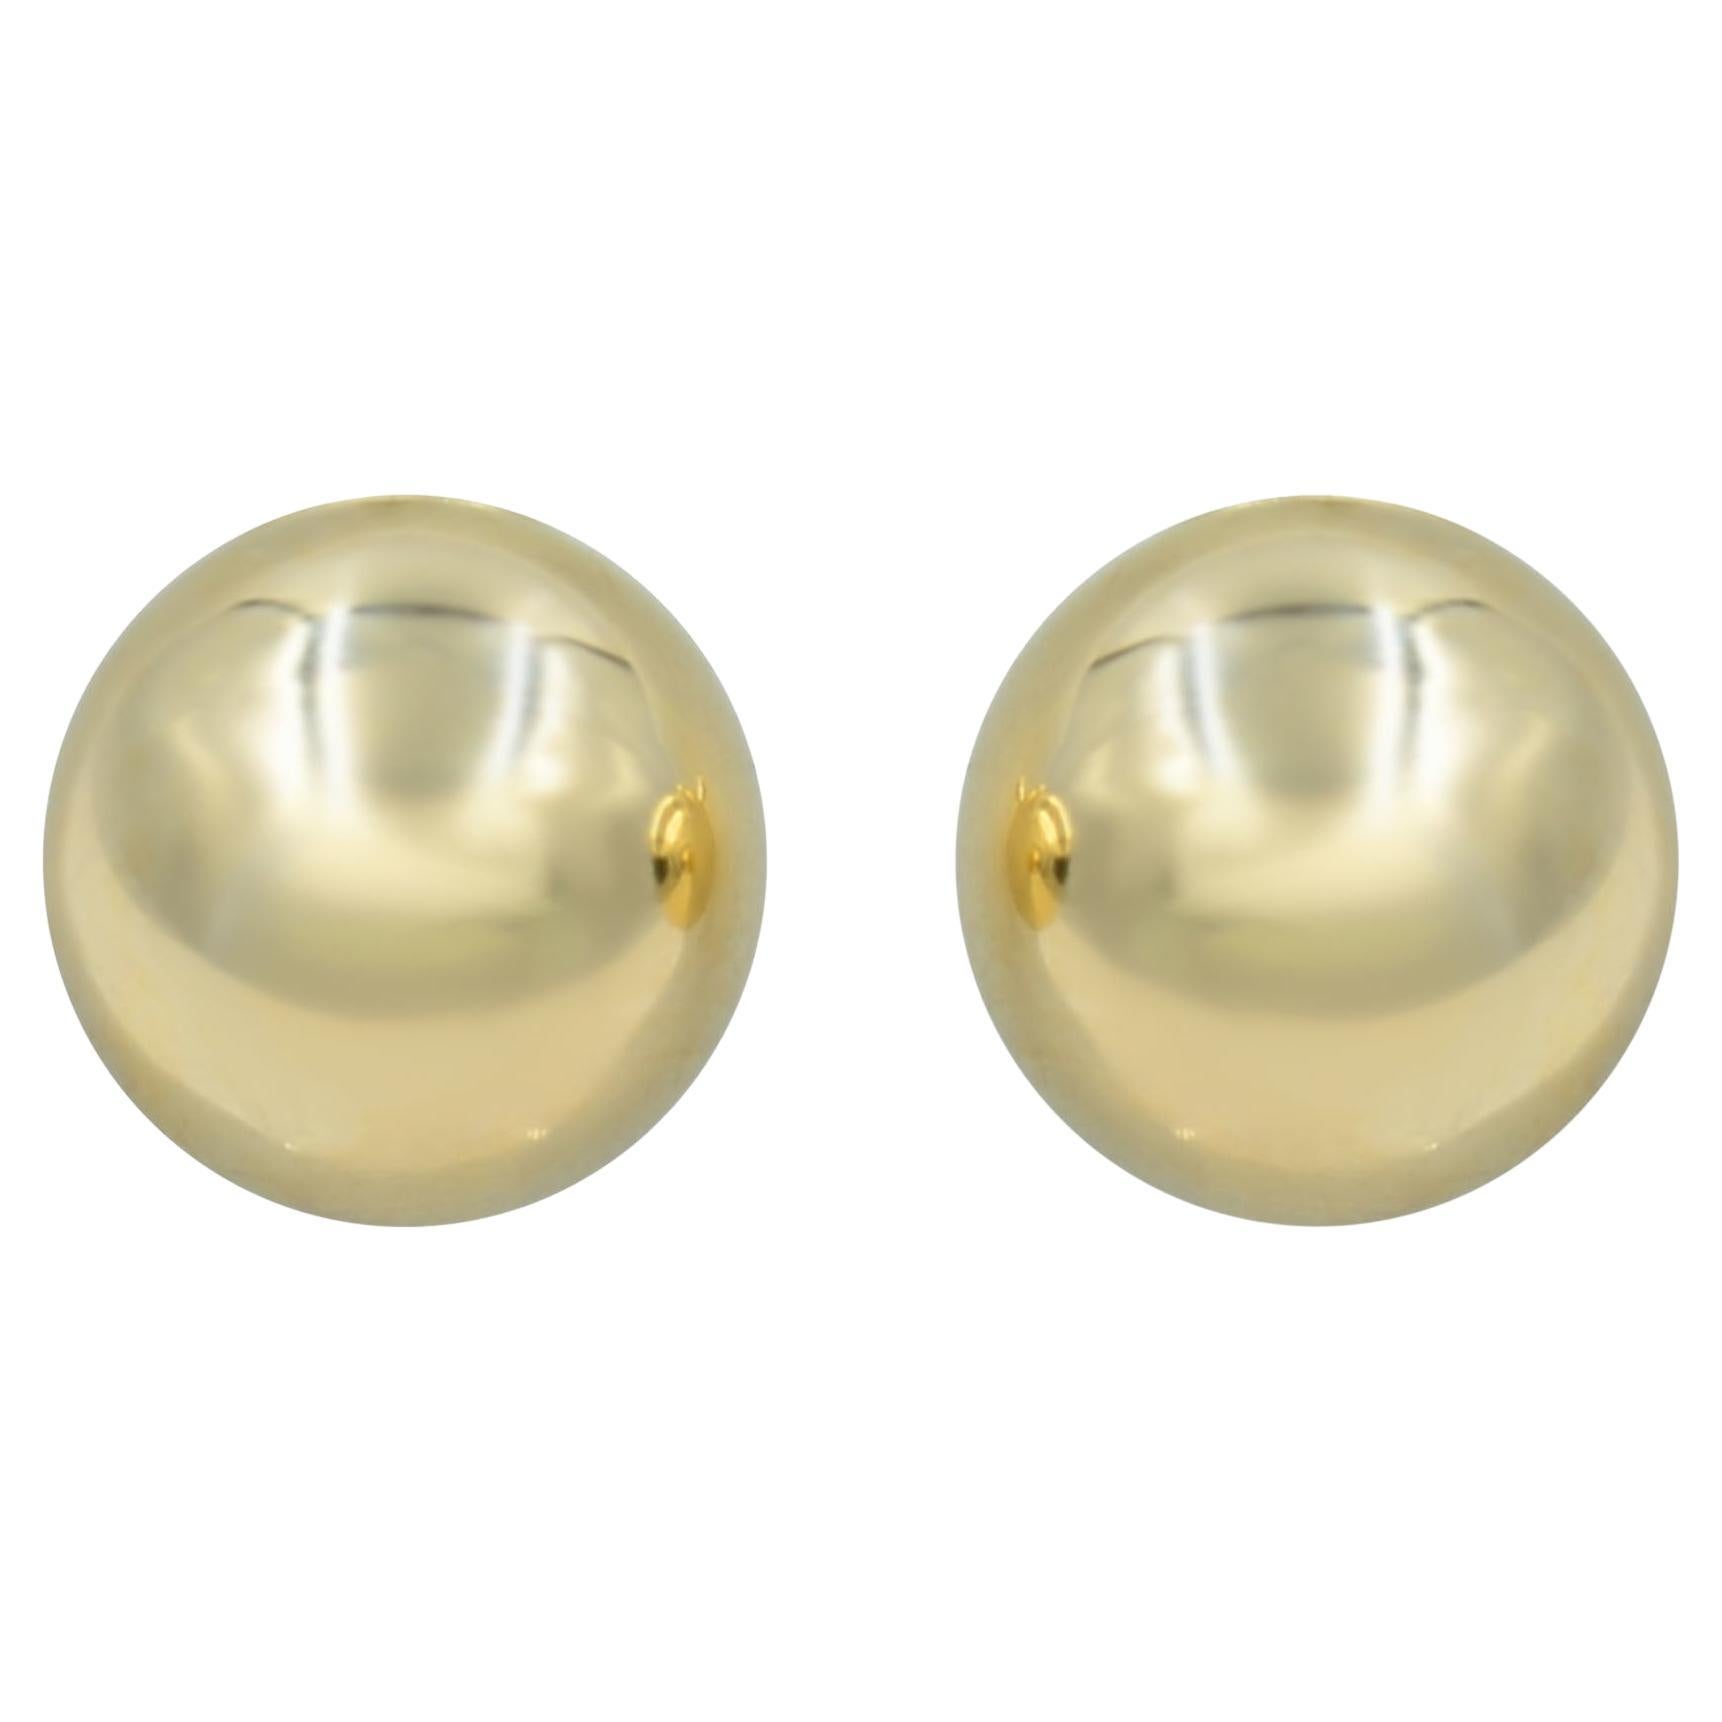 Rachel Koen Ball Stud Earrings 14K Yellow Gold